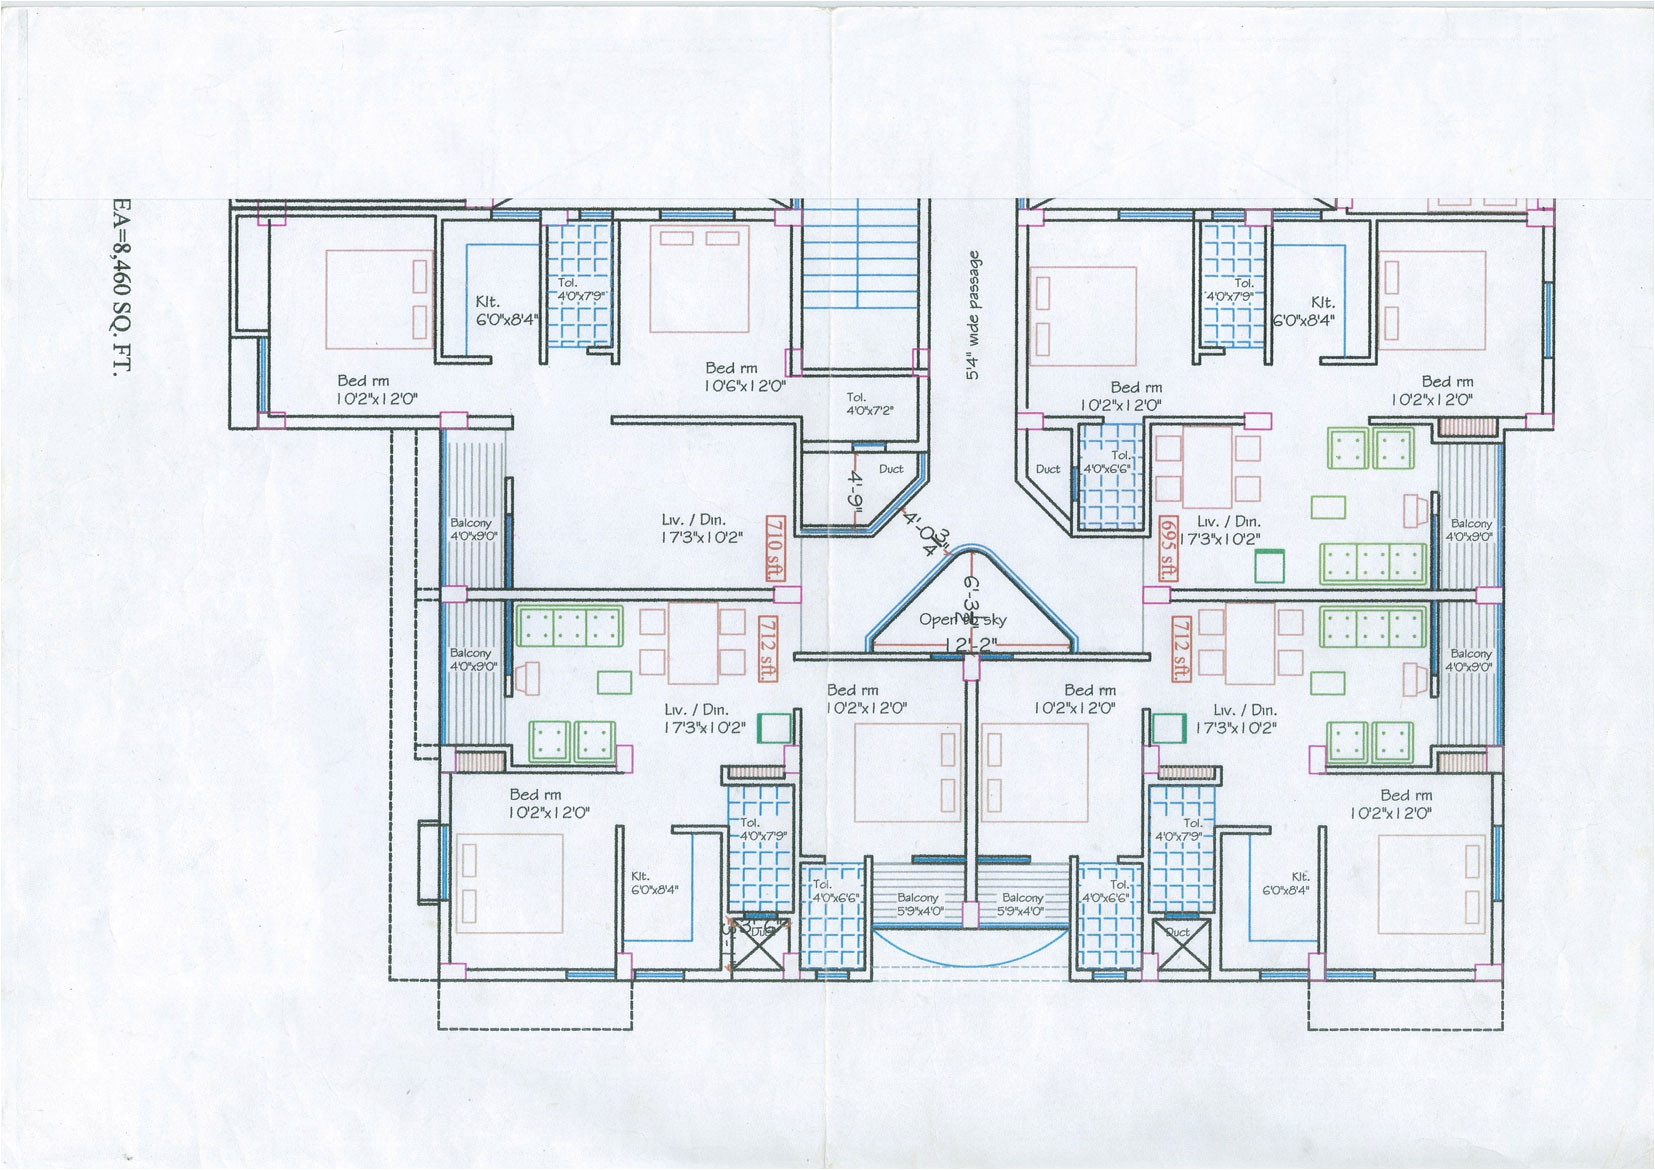 dream house floor plans with others 7d0018ea2efce6a9ca77a986cbd52dc1